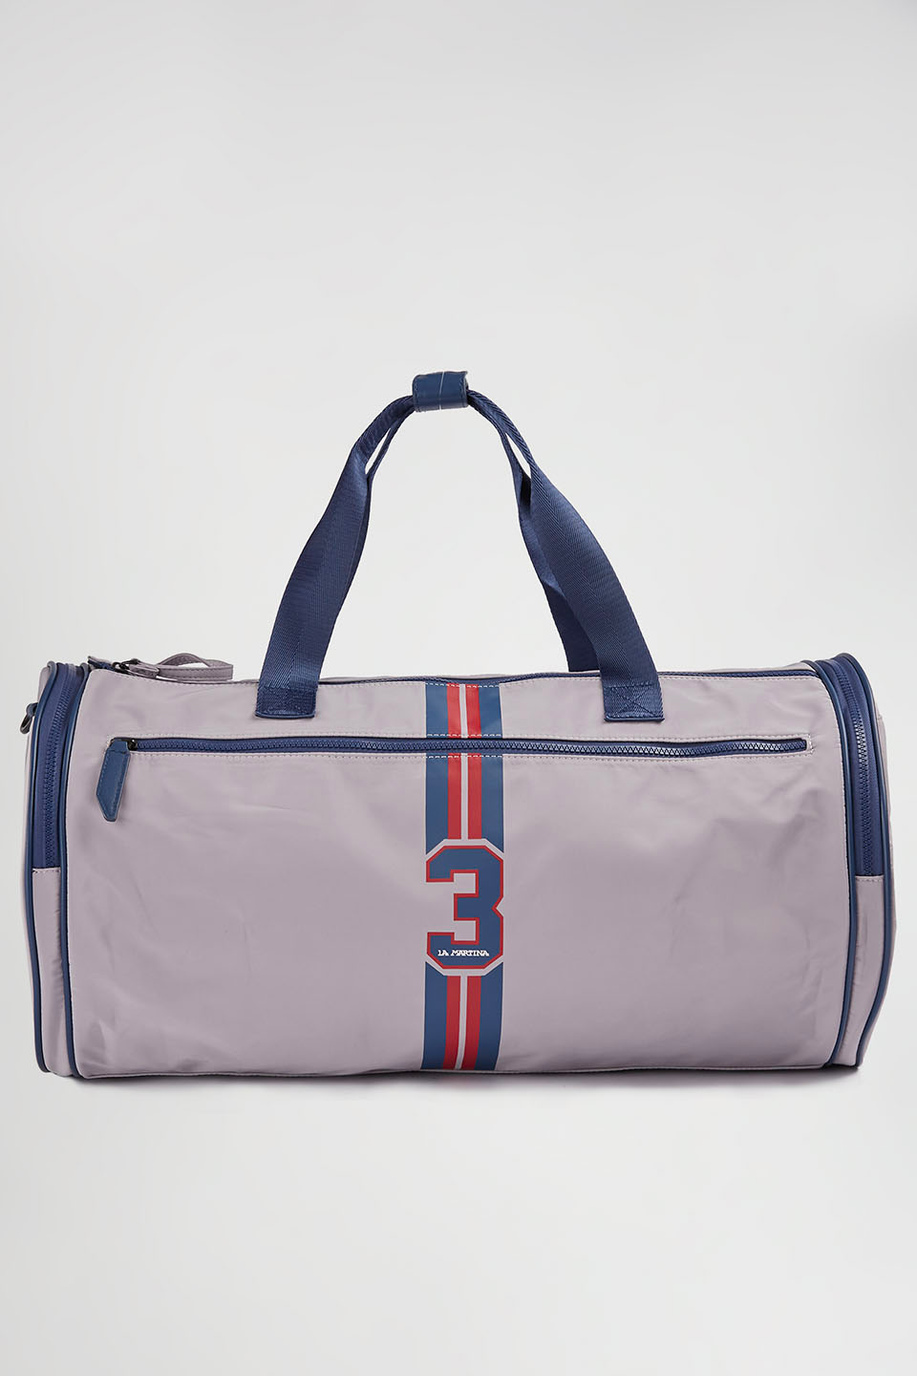 Grand sac en nylon - Accessoires | La Martina - Official Online Shop